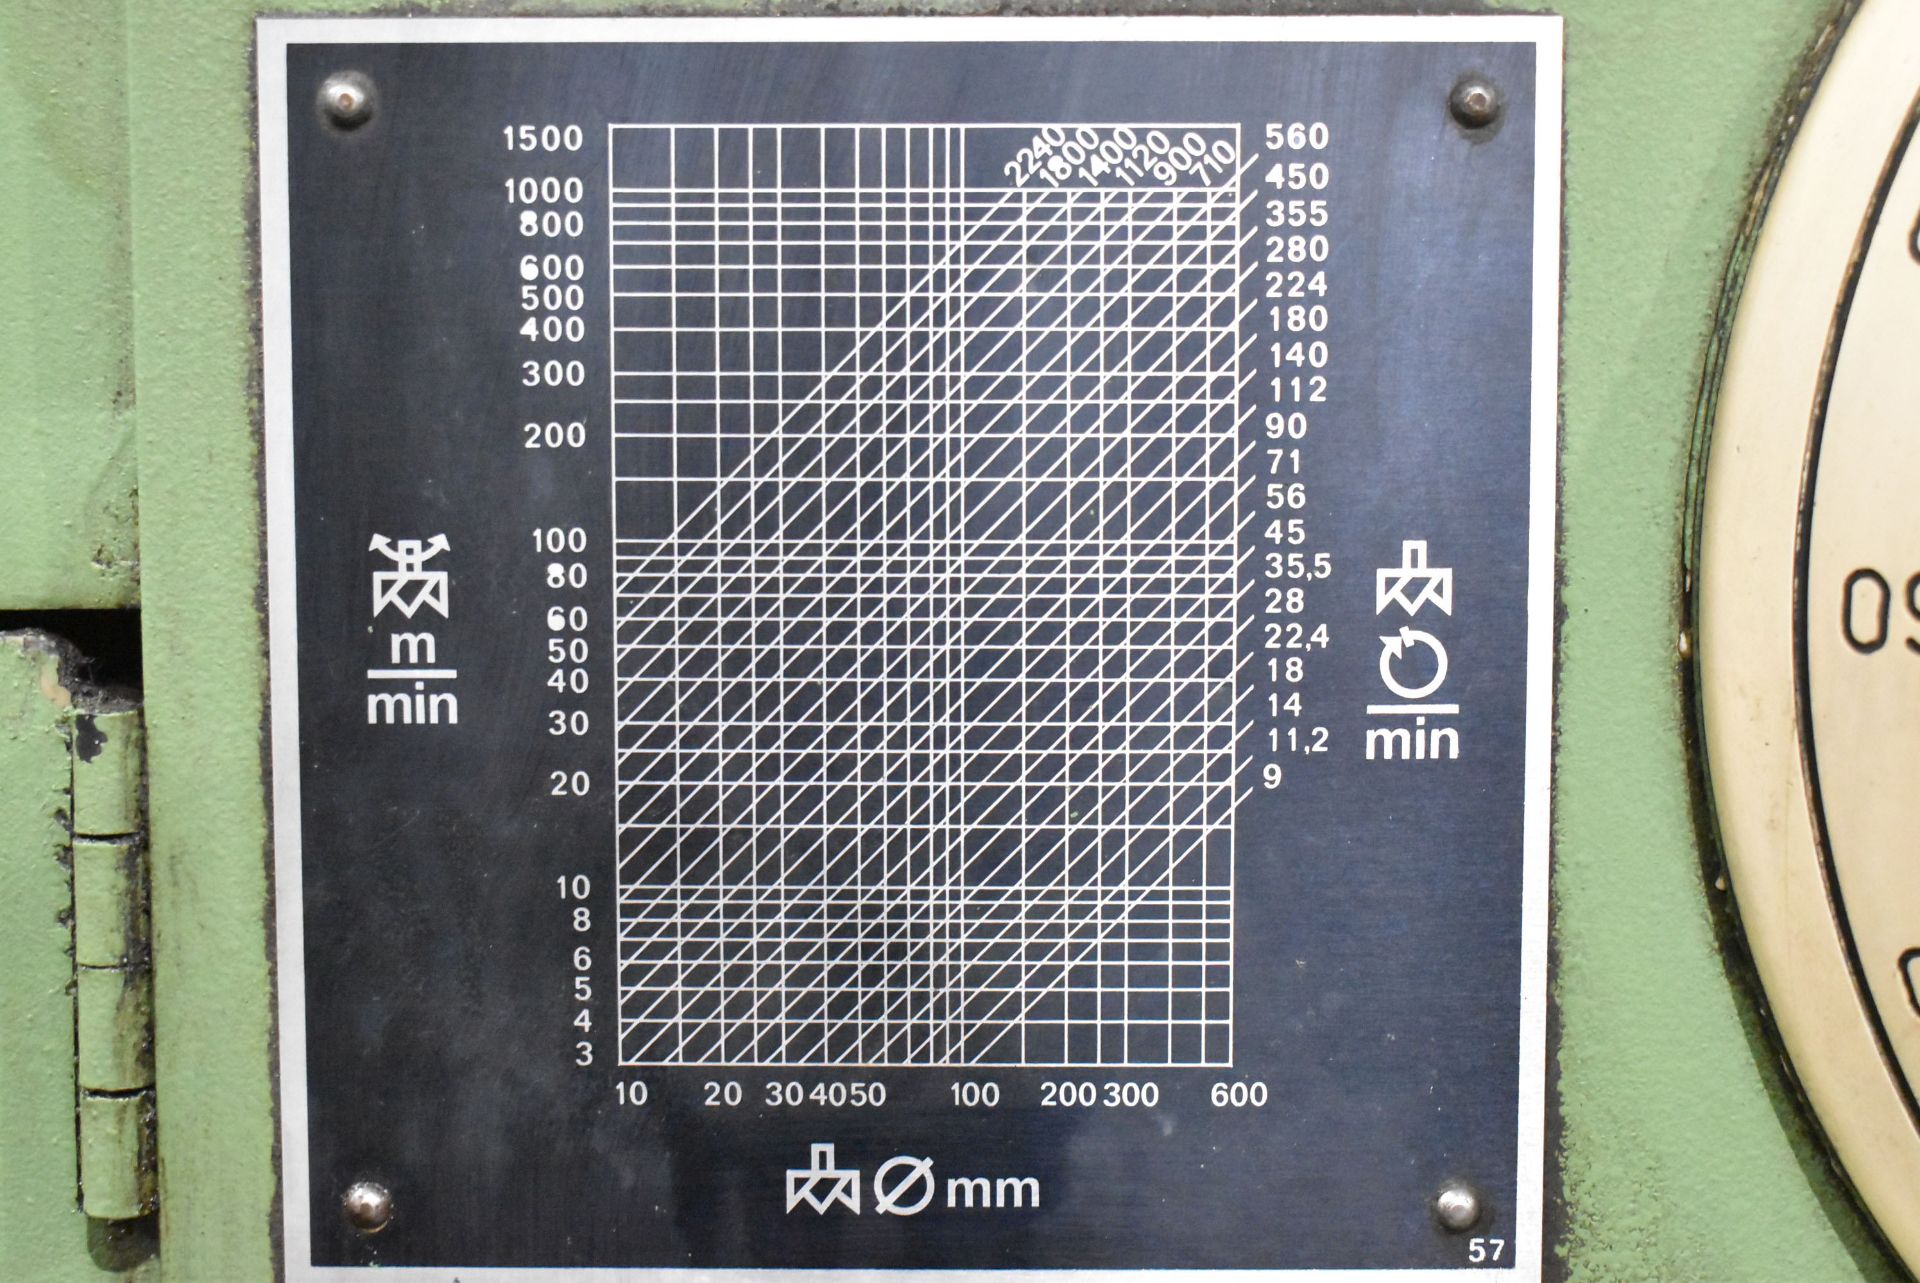 WMW HECKERT FU450X1800 APUG UNIVERSAL MILLING MACHINE WITH 20"X70" TABLE, SPEEDS TO 2240 RPM, 50 - Image 7 of 9